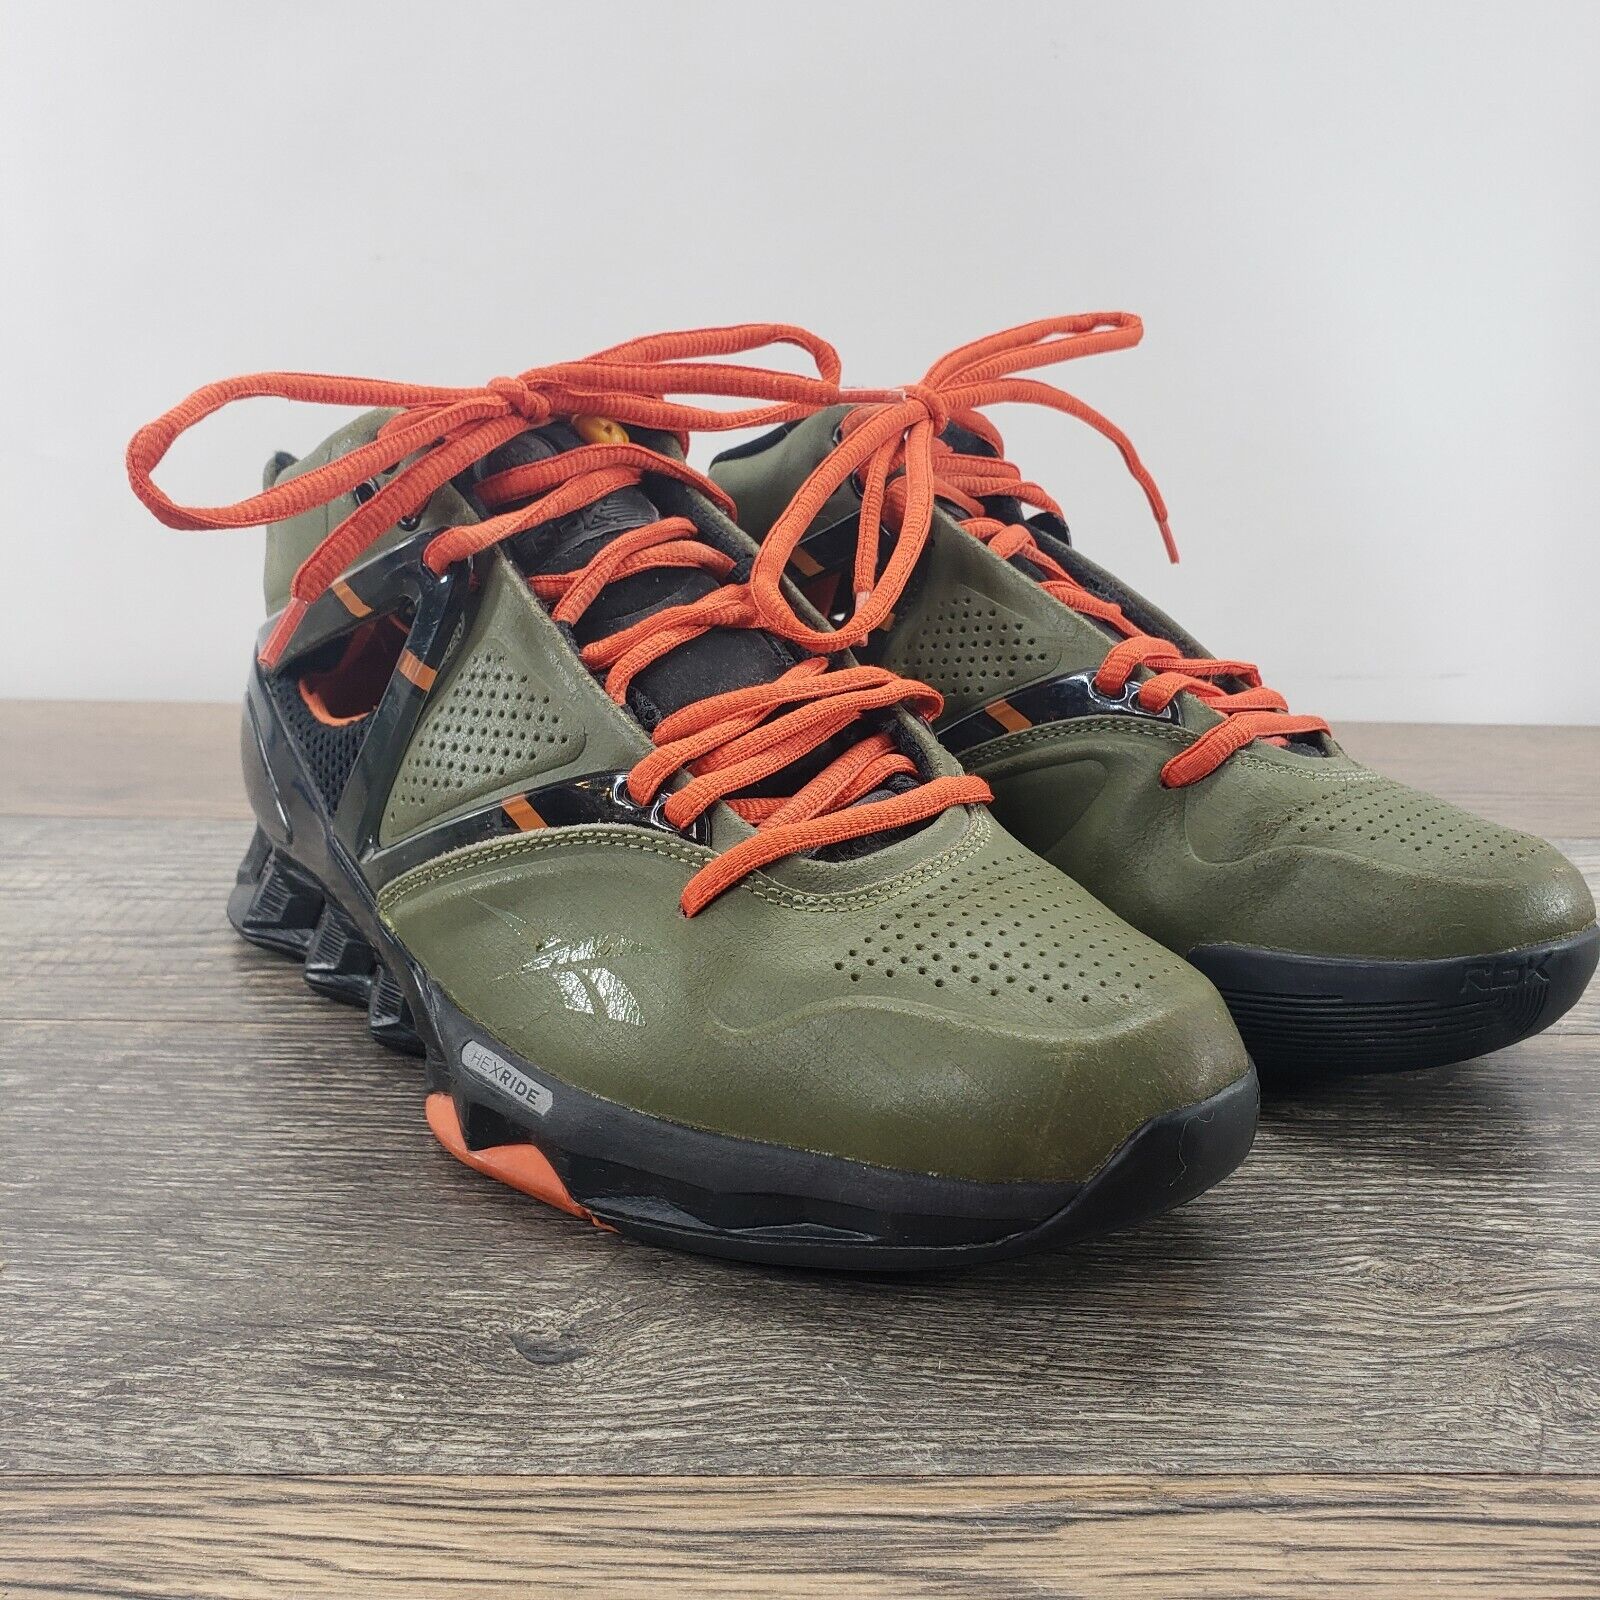 Reebok Pump Orchard Street Hexride Orange Basketball Shoes 4-J09057 | eBay